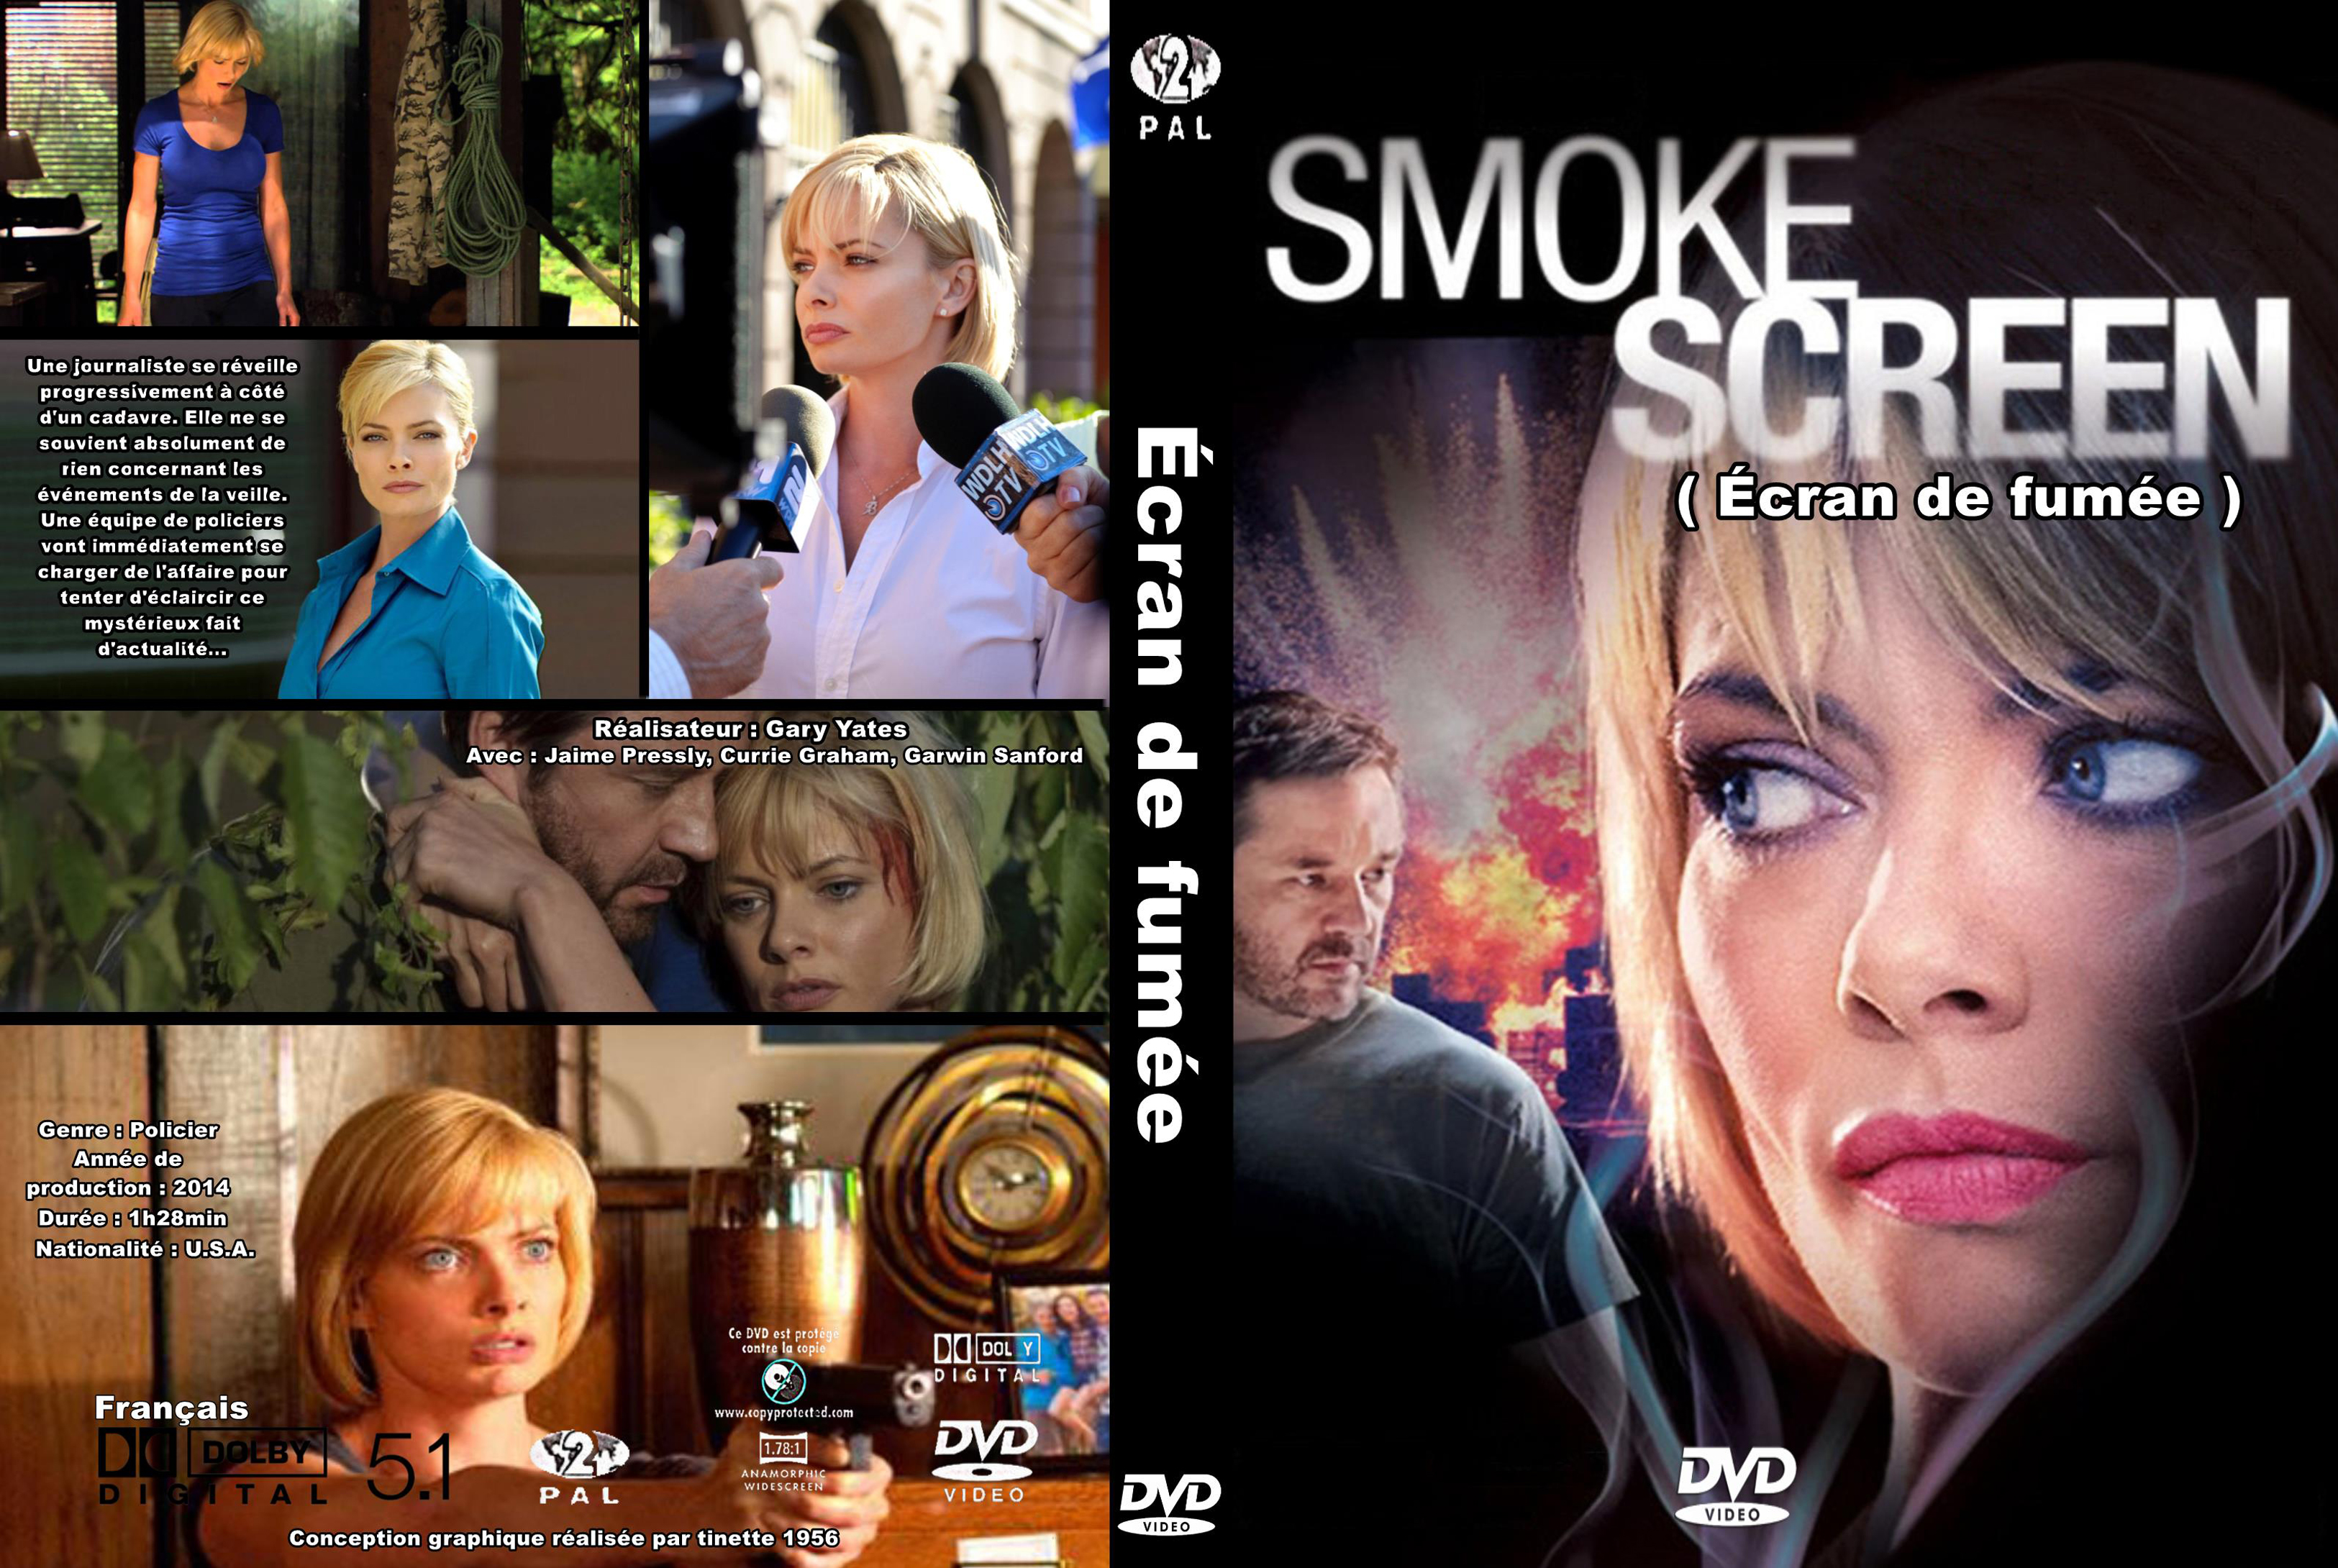 Jaquette DVD Ecran de fume custom